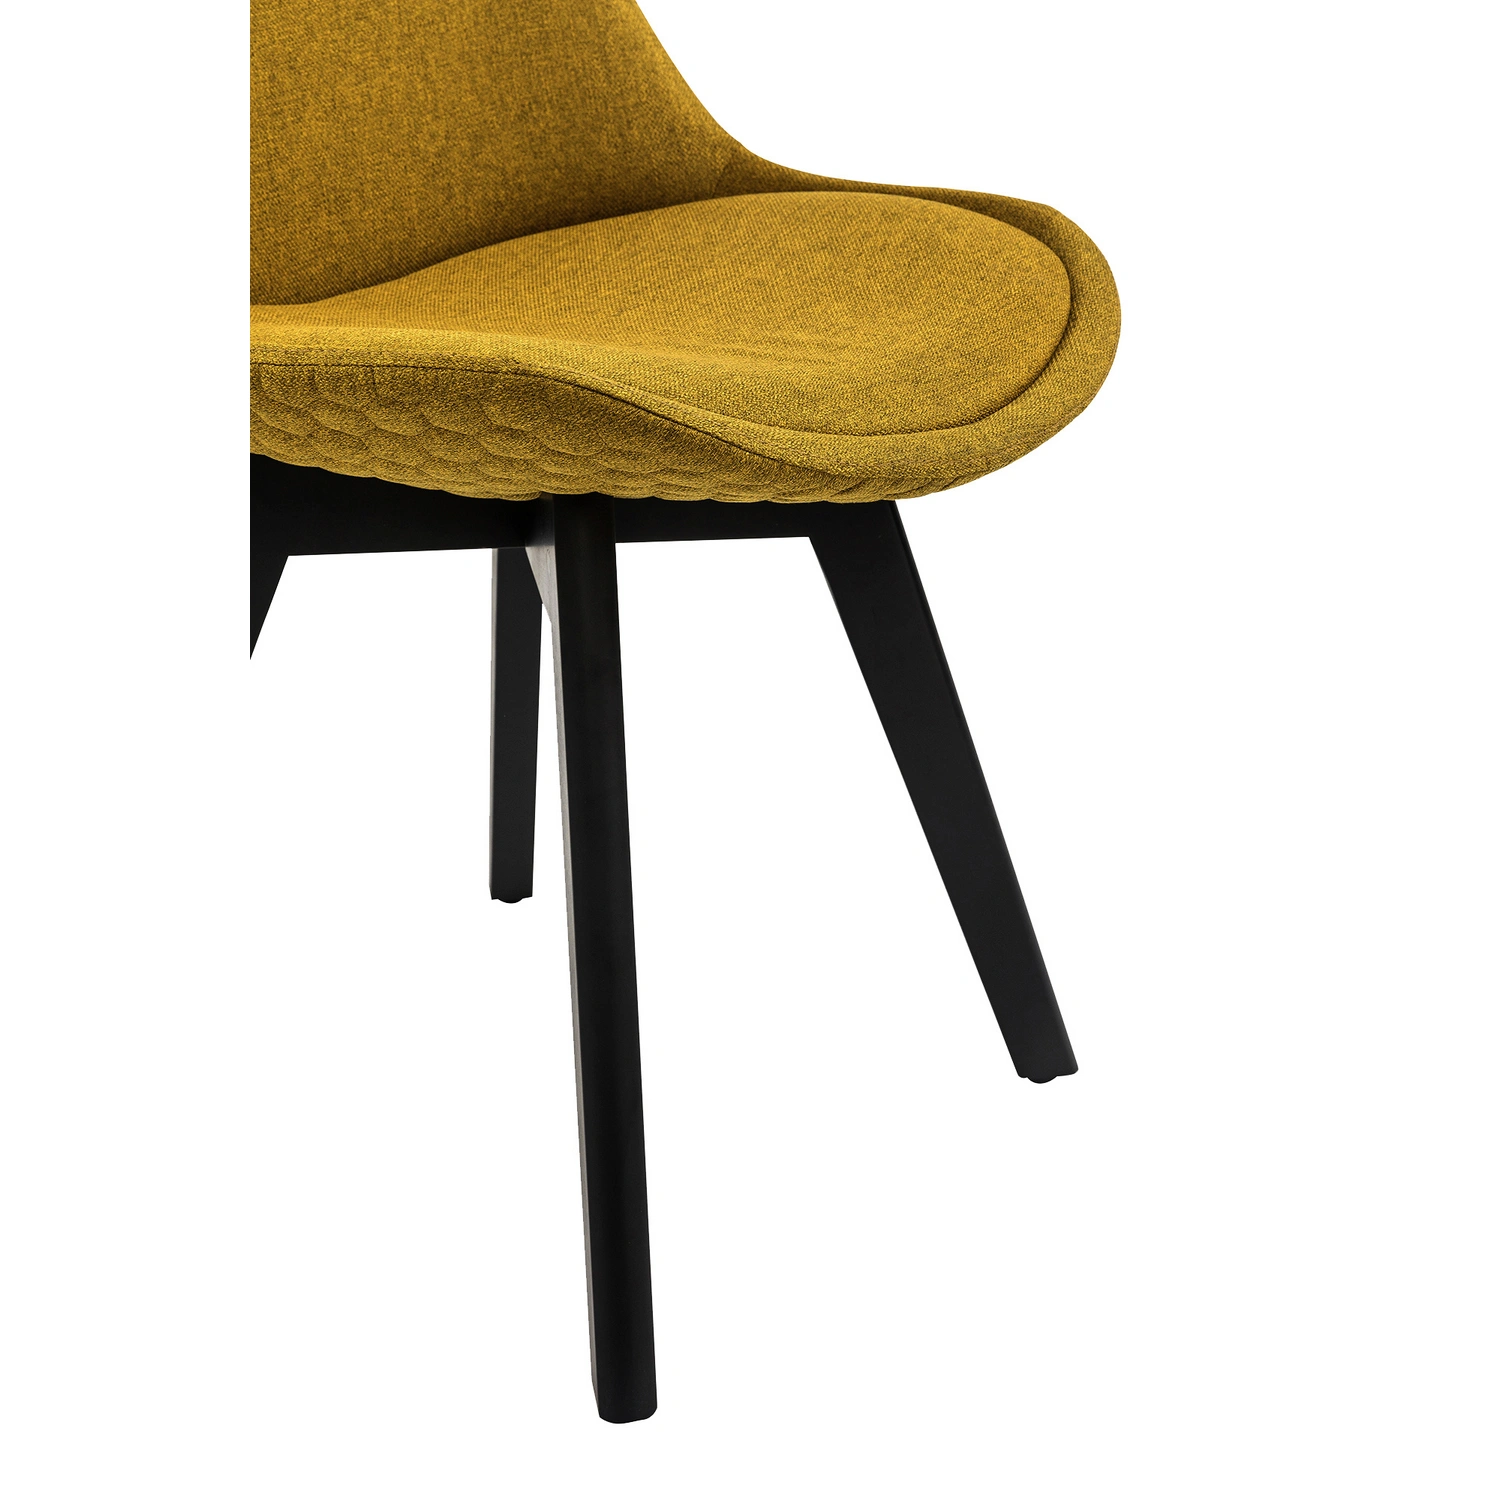 SalesFever Stuhl, Höhe: 84 cm, gelb, 2 stk | Stühle